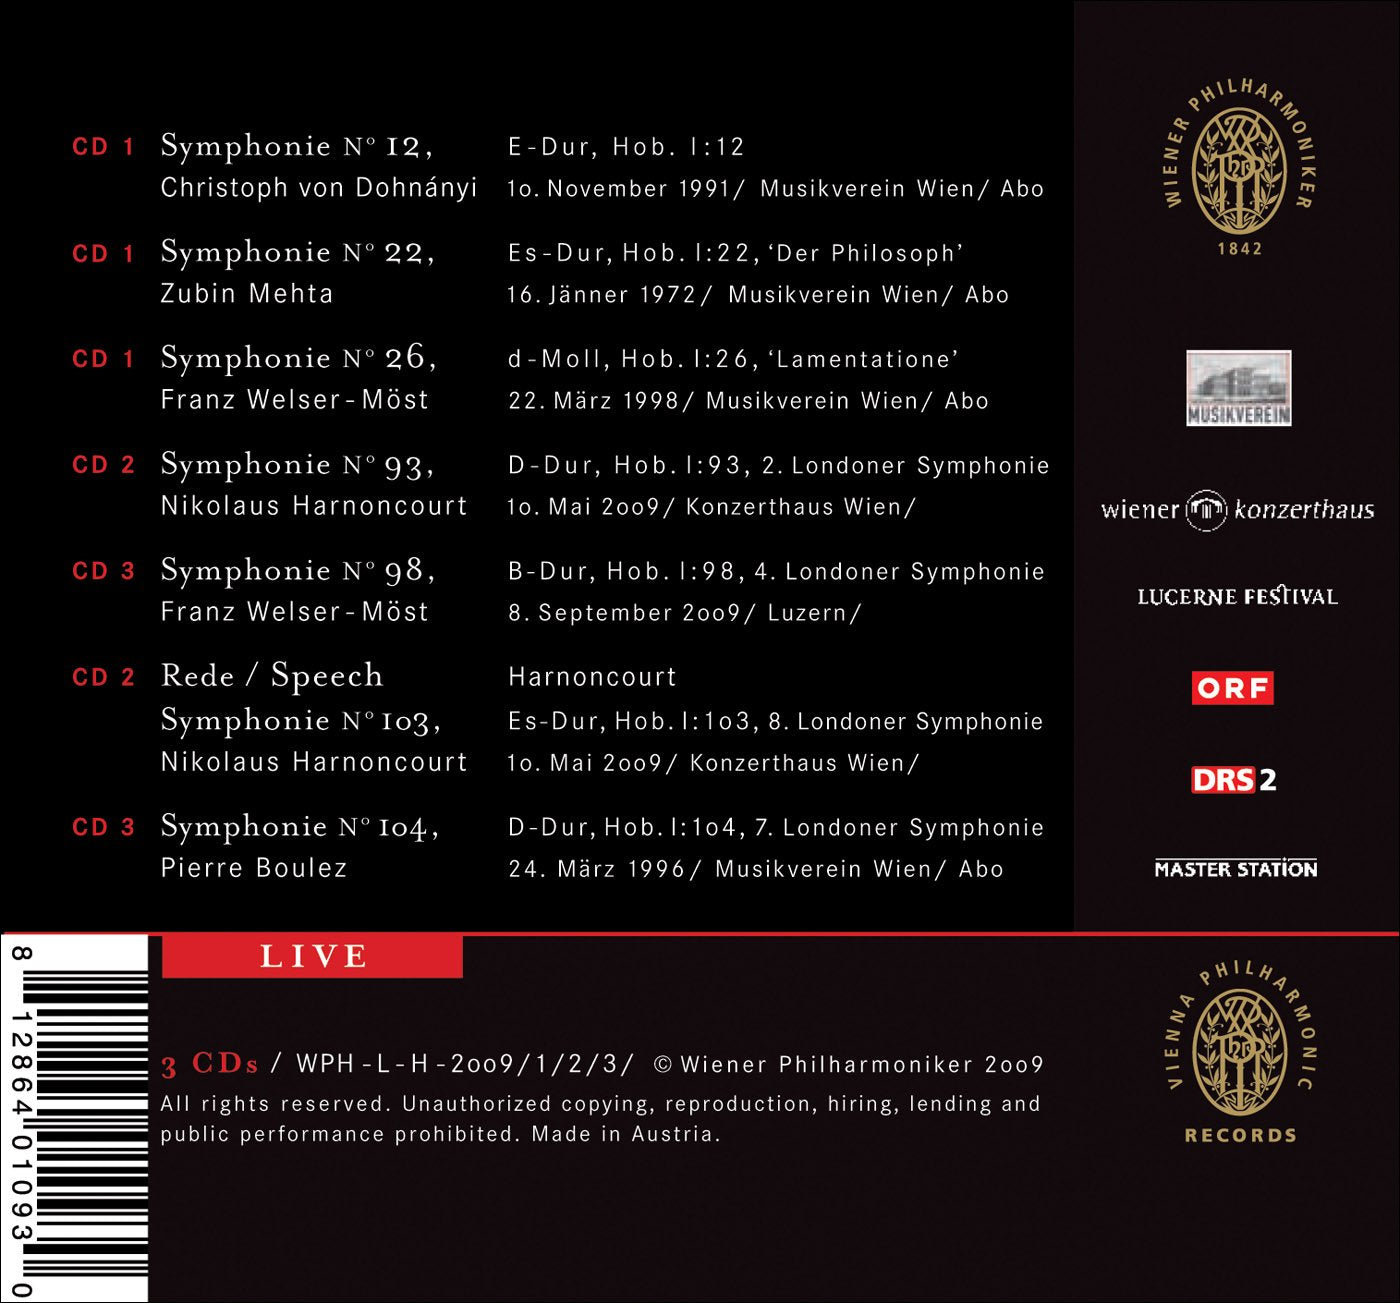 HAYDN: SYMPHONIES - BOULEZ, MEHTA, HARNONCOURT, DOHNANYI, WELSER-MOST, VIENNA PHILHARMONIC (3 CDS)